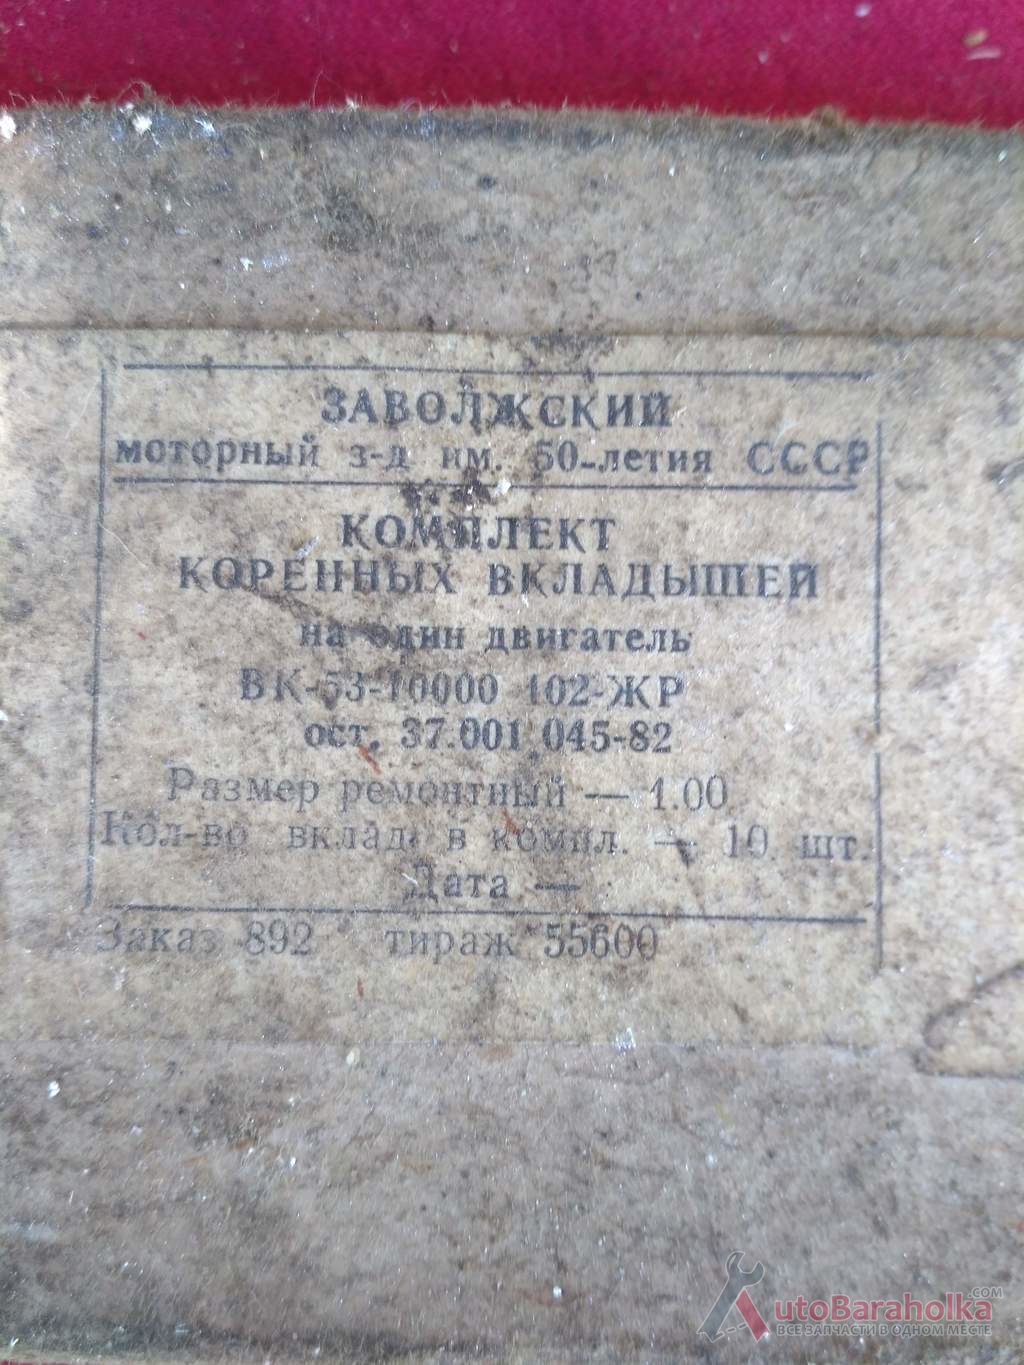 Продам Комплект коренных вкладышей ГАЗ-53, размер 1.00 Краматорск